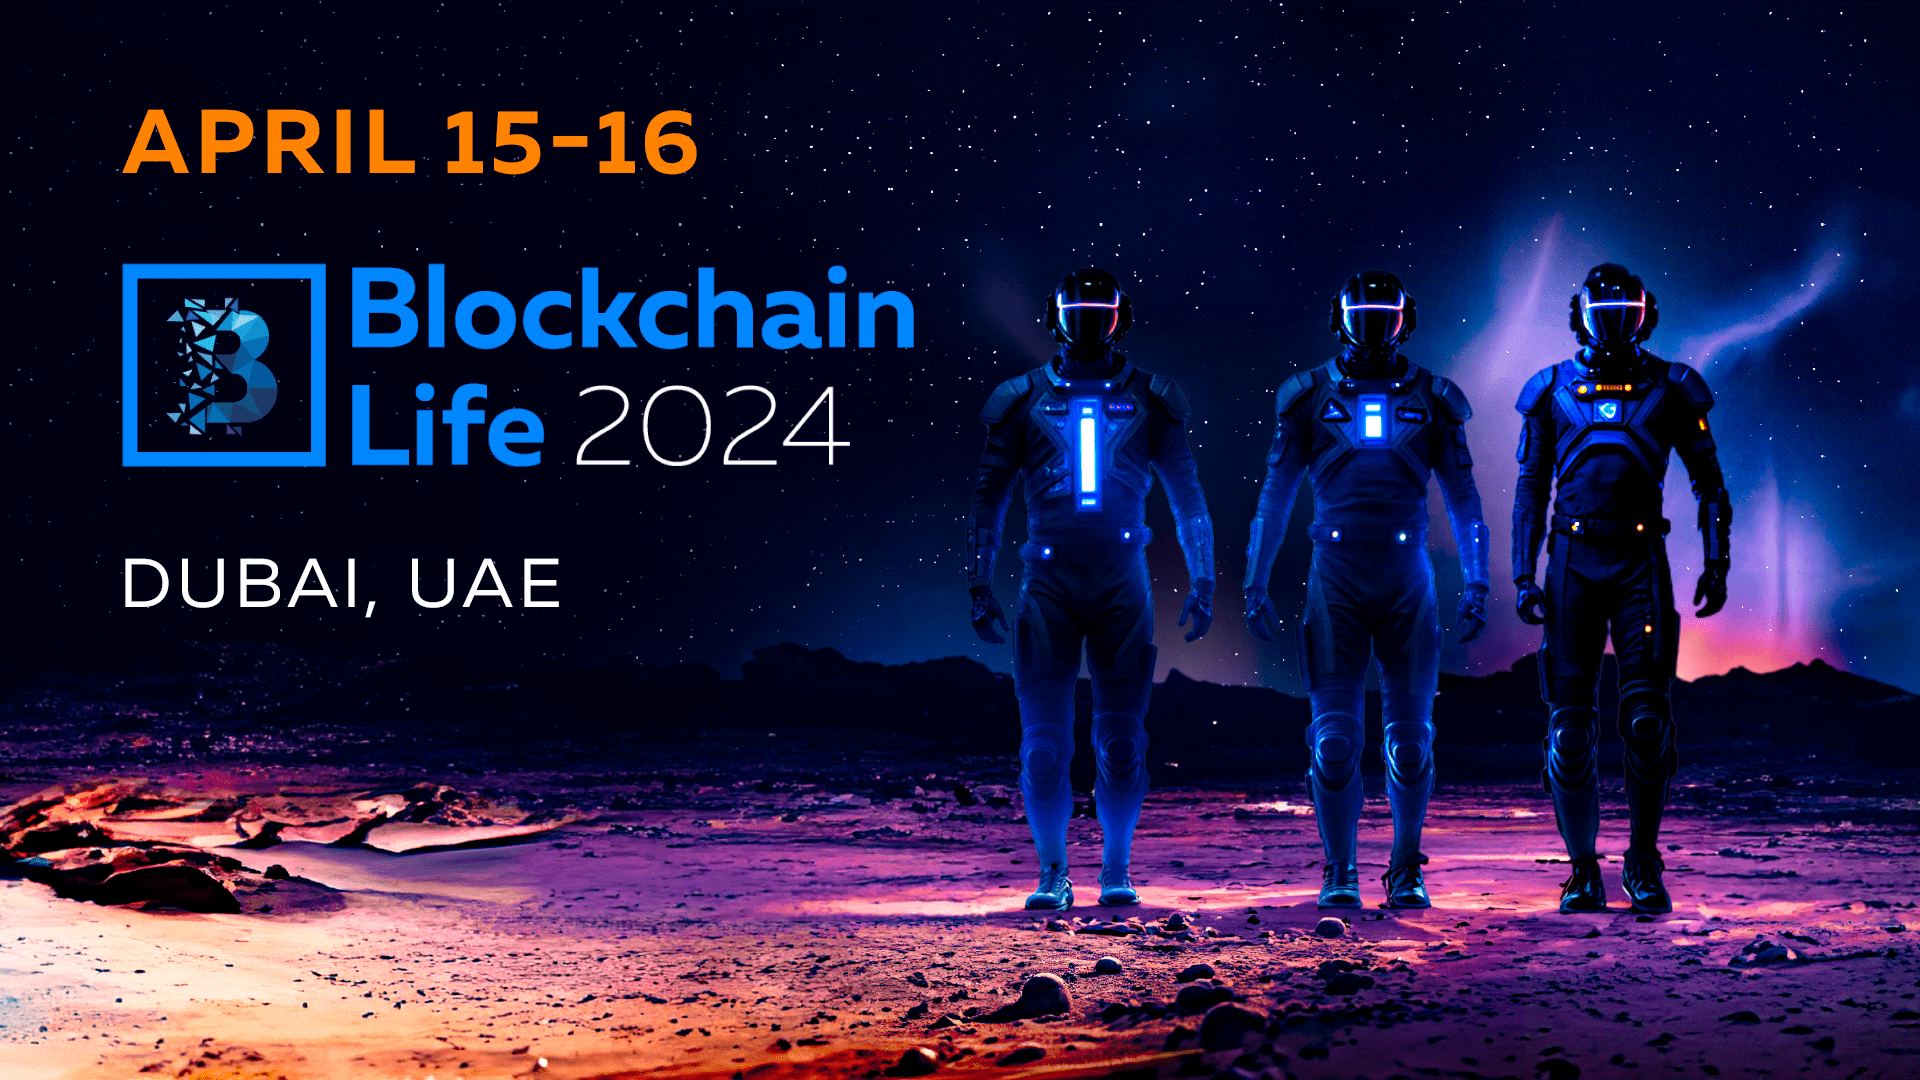 Blockchain Life 2024 organized by Blockchain Life